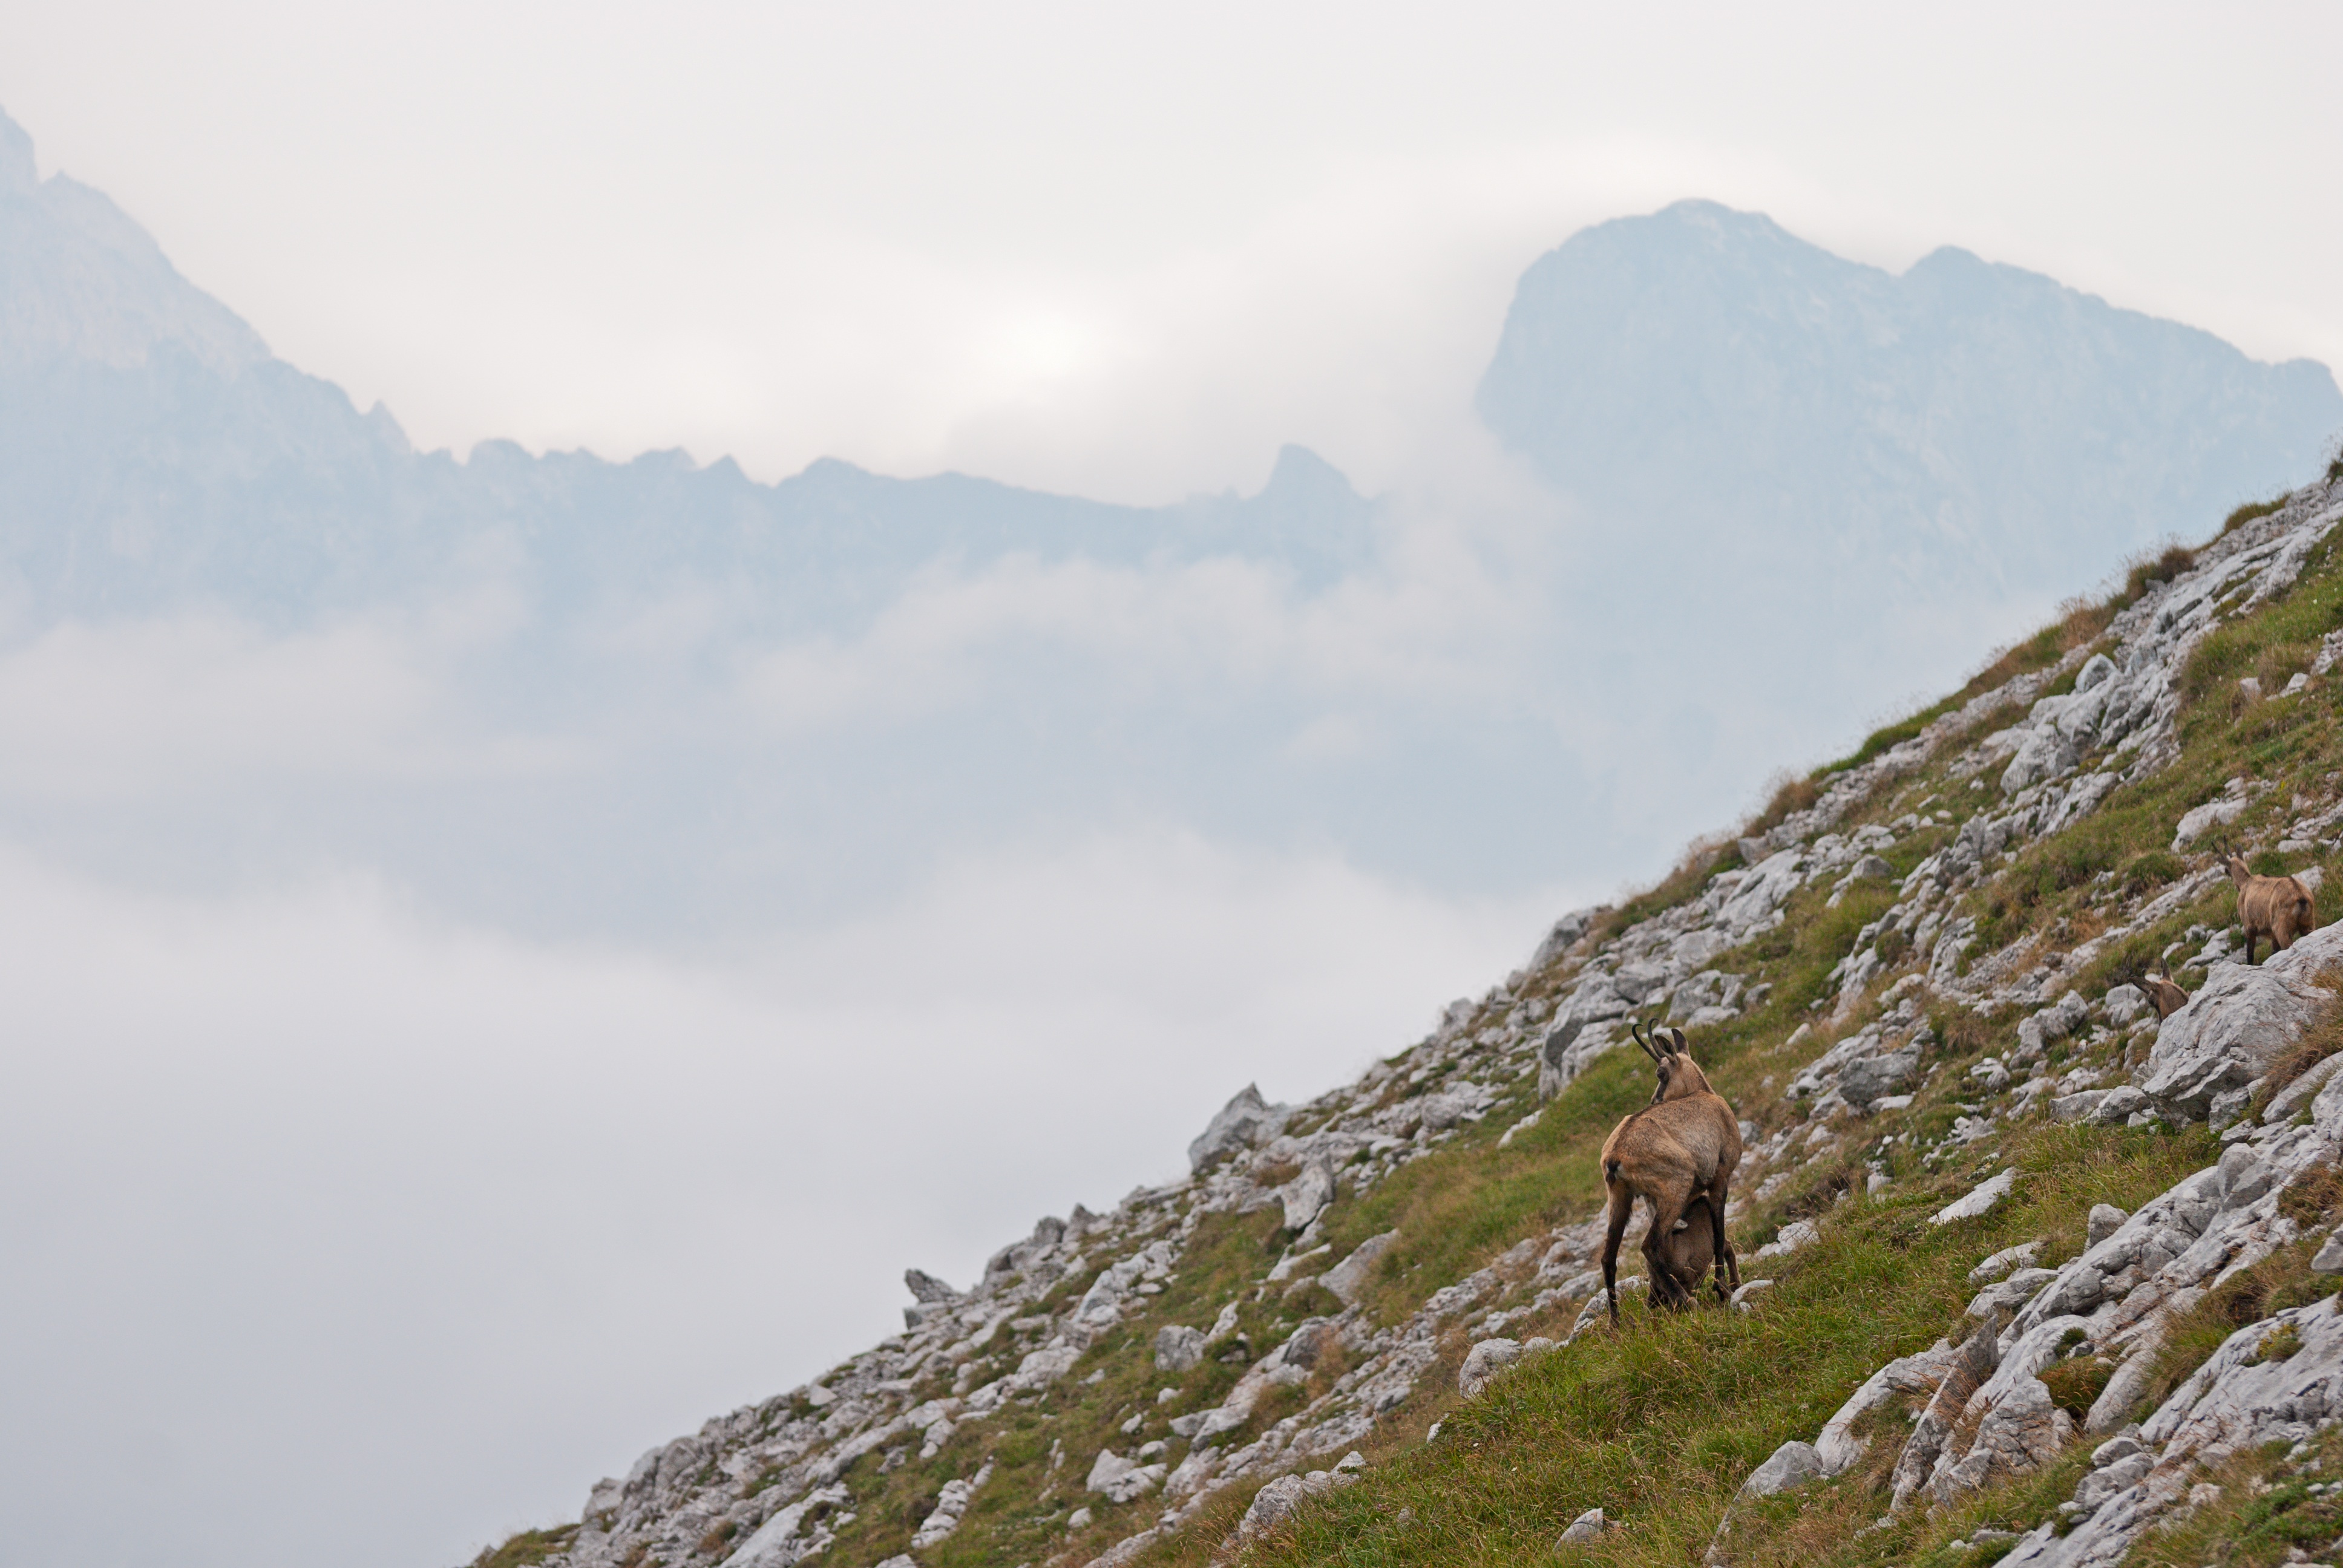 Ibex on the Mountain, Animal, Ibex, Landscape, Mountain, HQ Photo